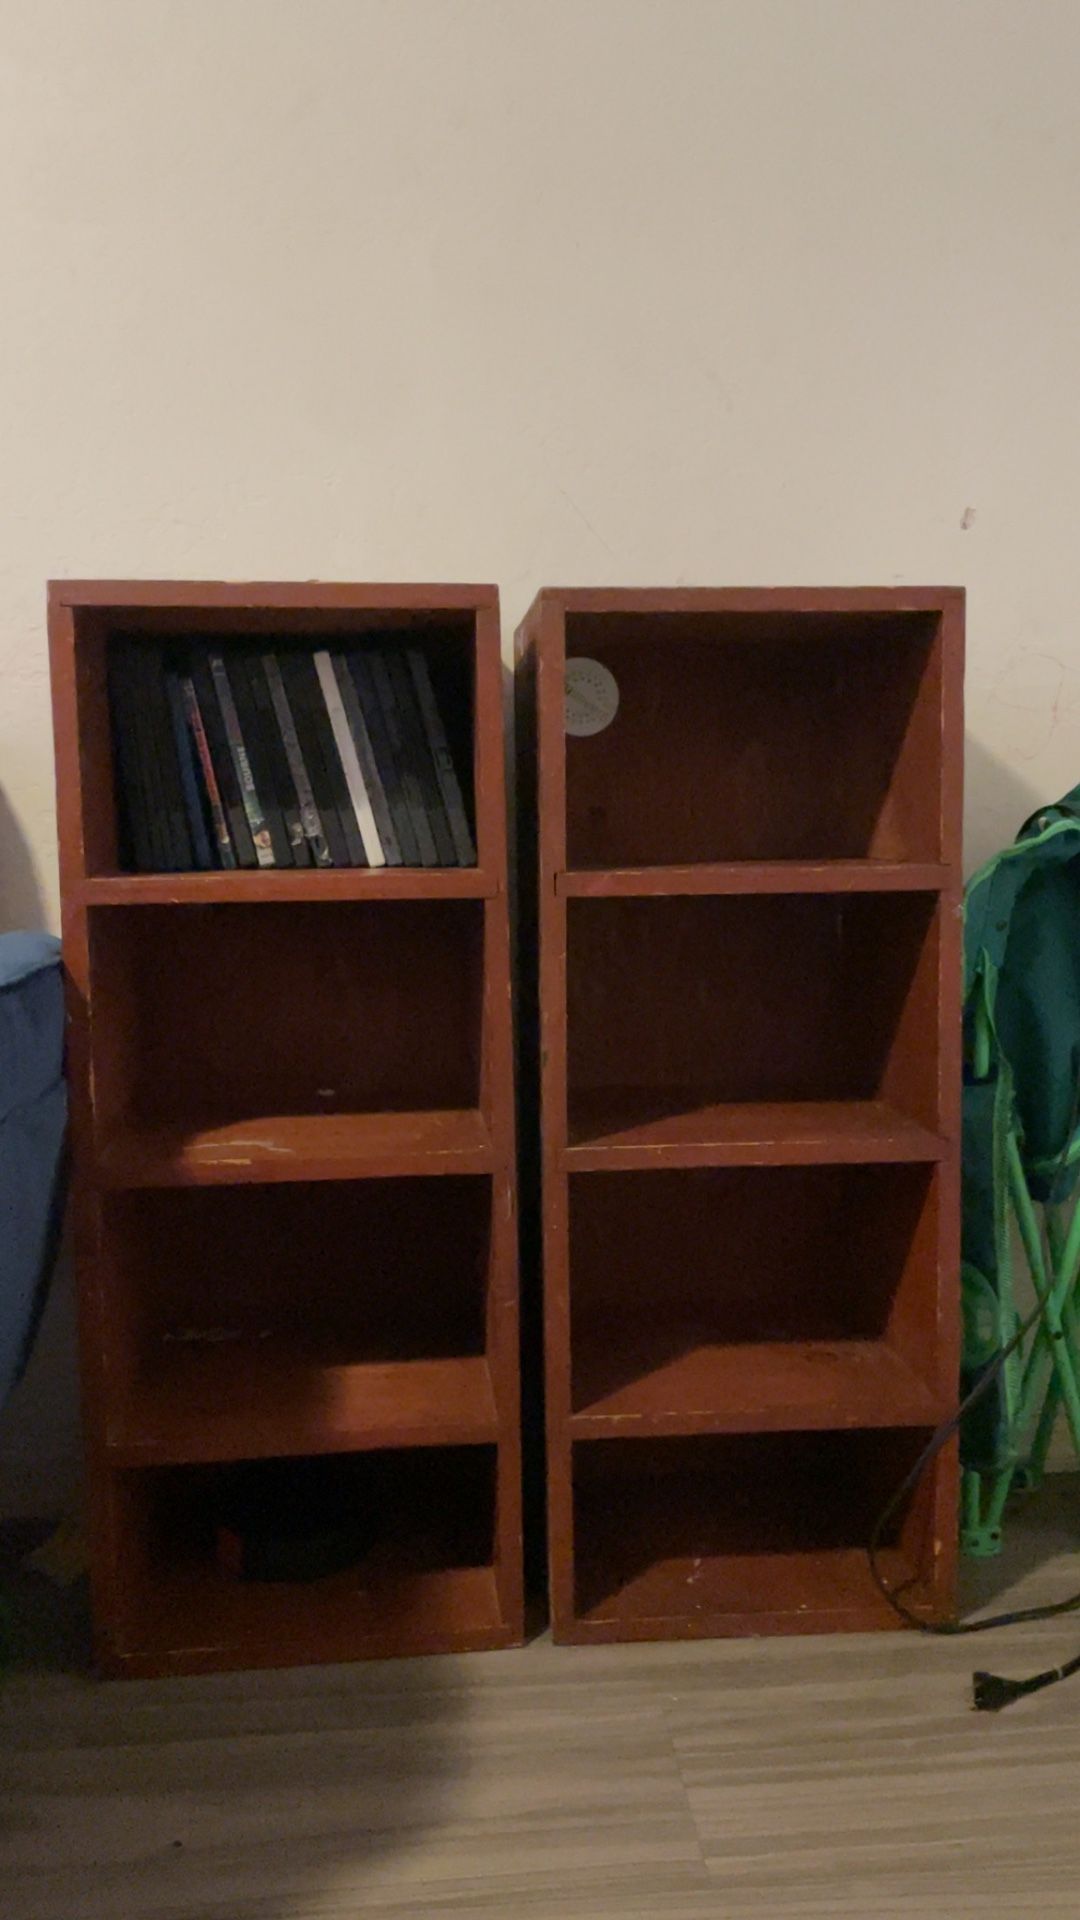 IKEA Toy Organizer, Tv With Remote, 2 Vintage Book Shelf